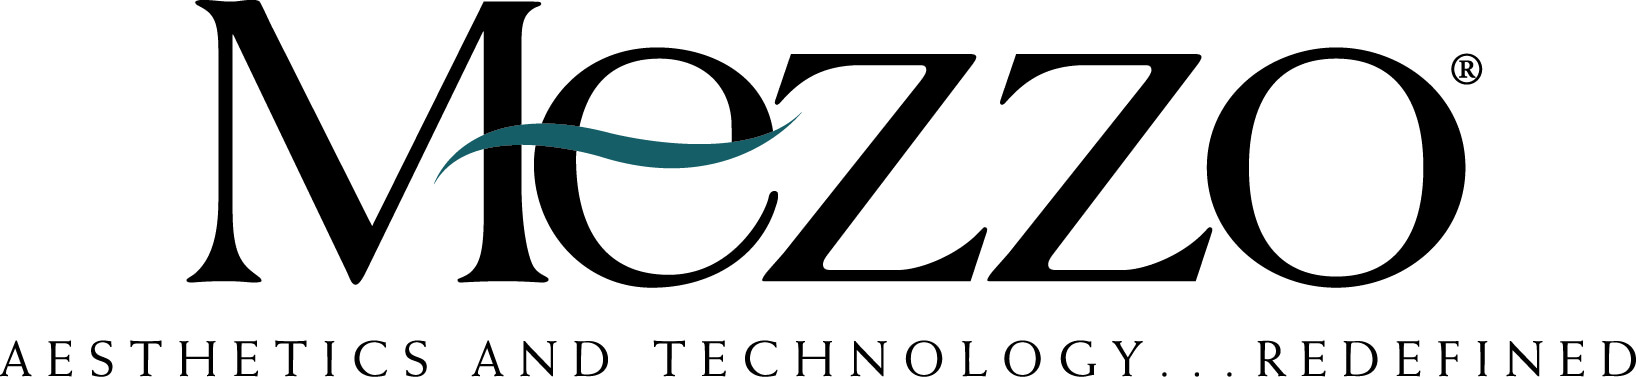 Mezzo-logo-image